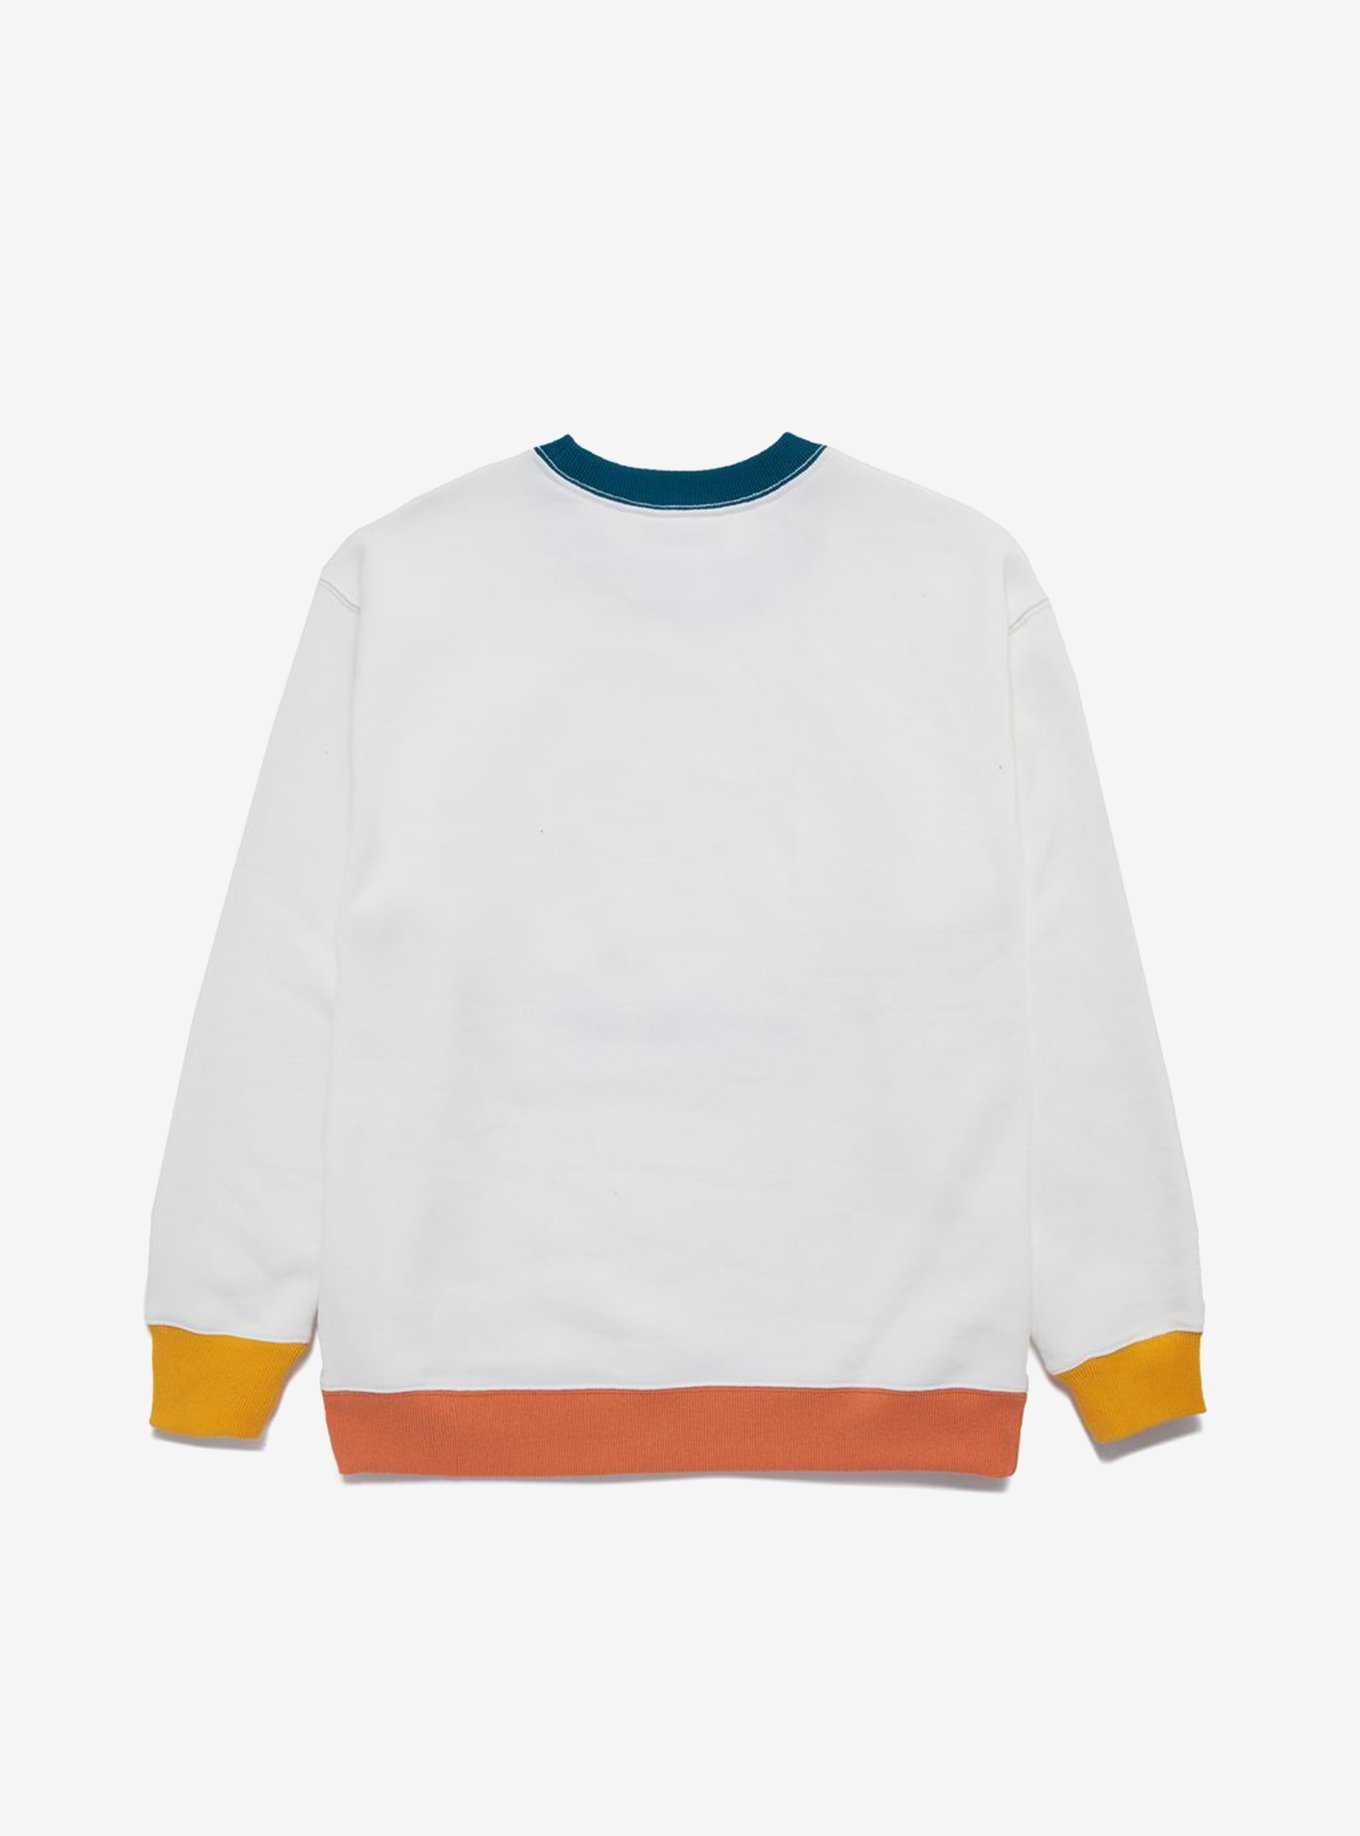 Samii Ryan X Peanuts Duo Color-Block Sweatshirt, , hi-res